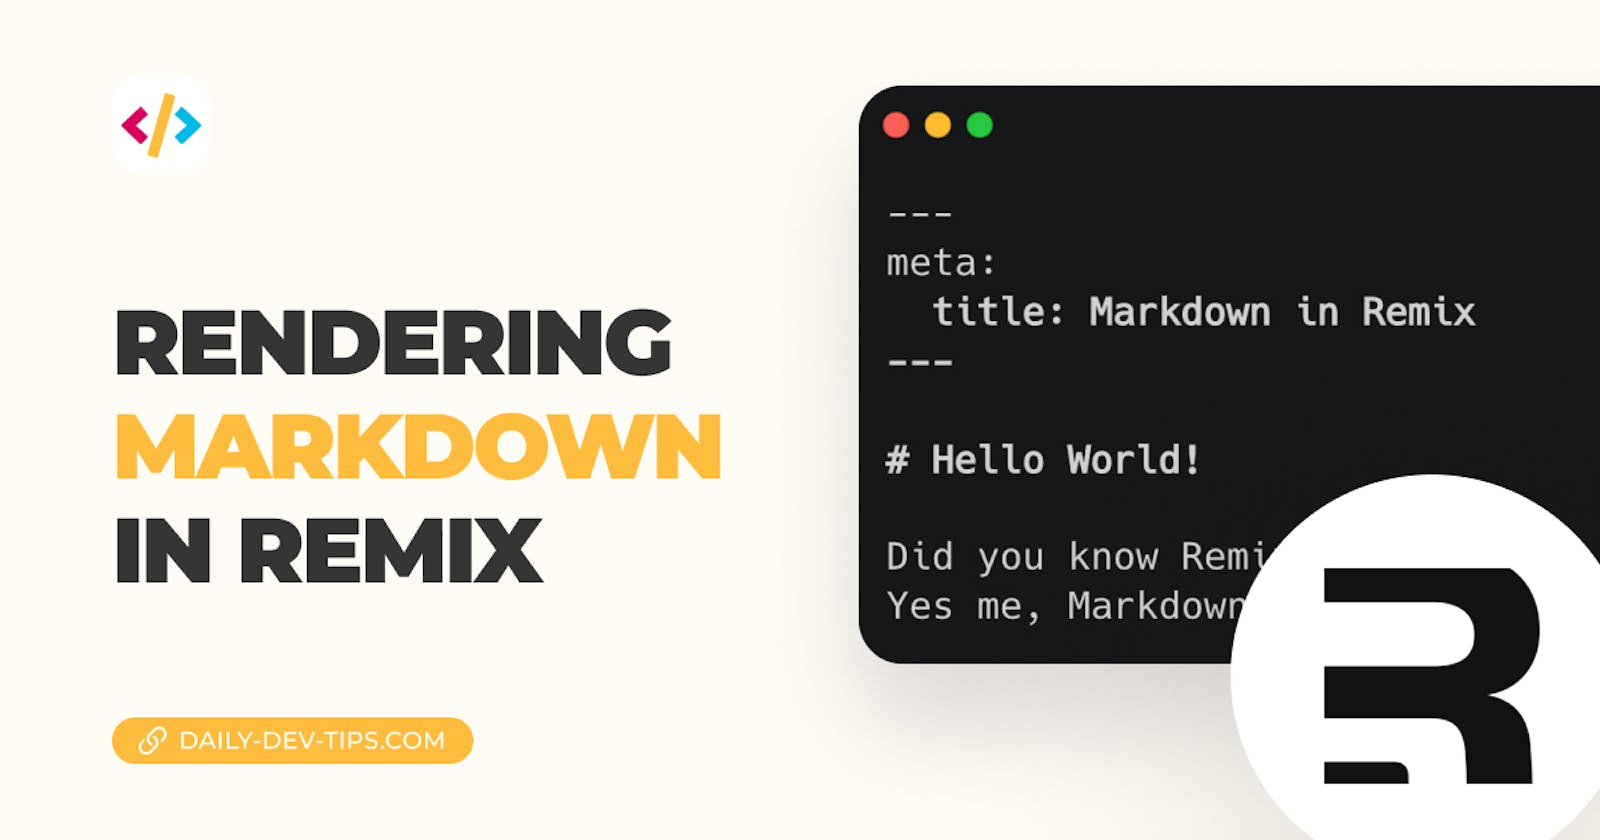 Rendering markdown in Remix